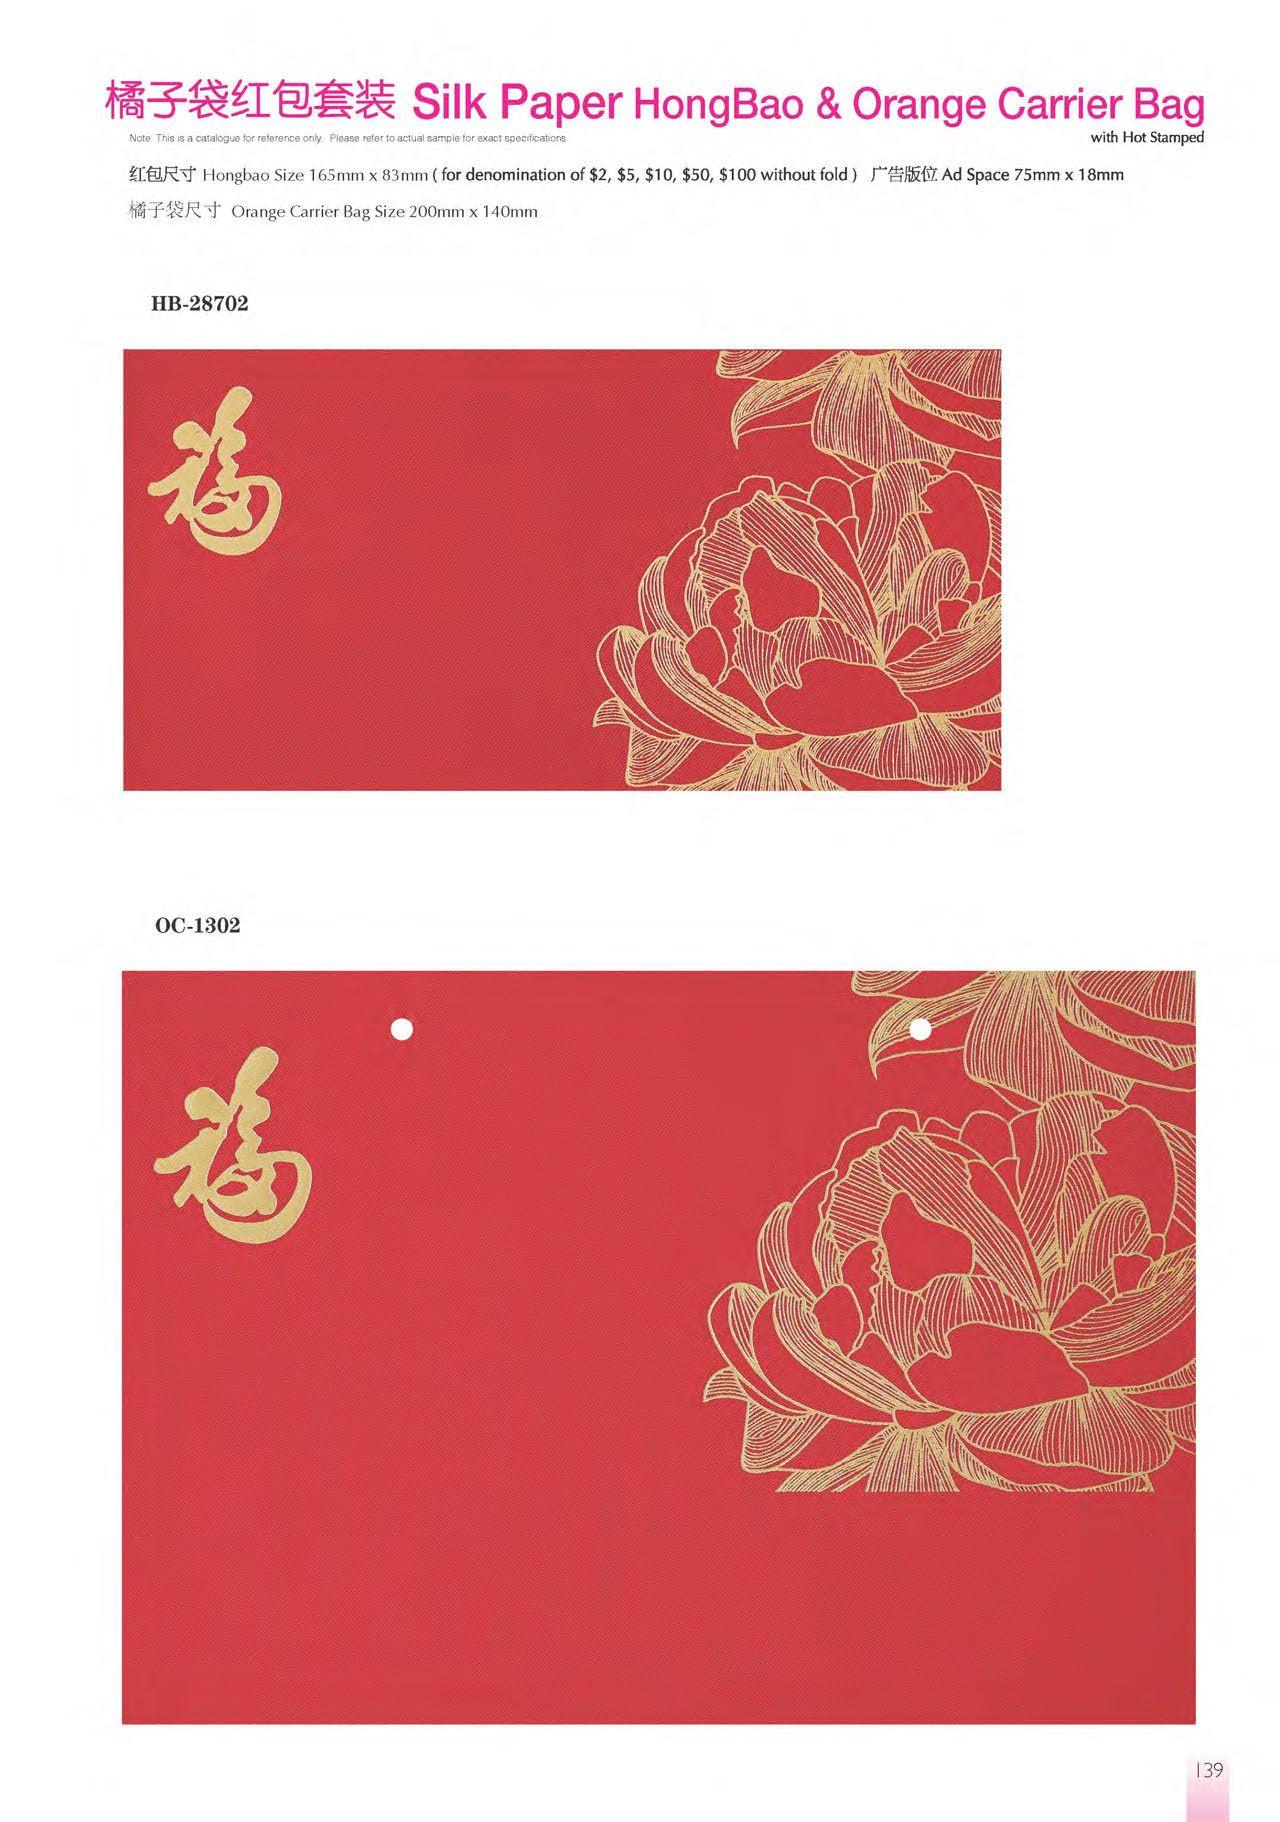 Red and Orange B Logo - CNY Orange Carrier Bag Catalog B (2019) - AcidPrint - Professional ...